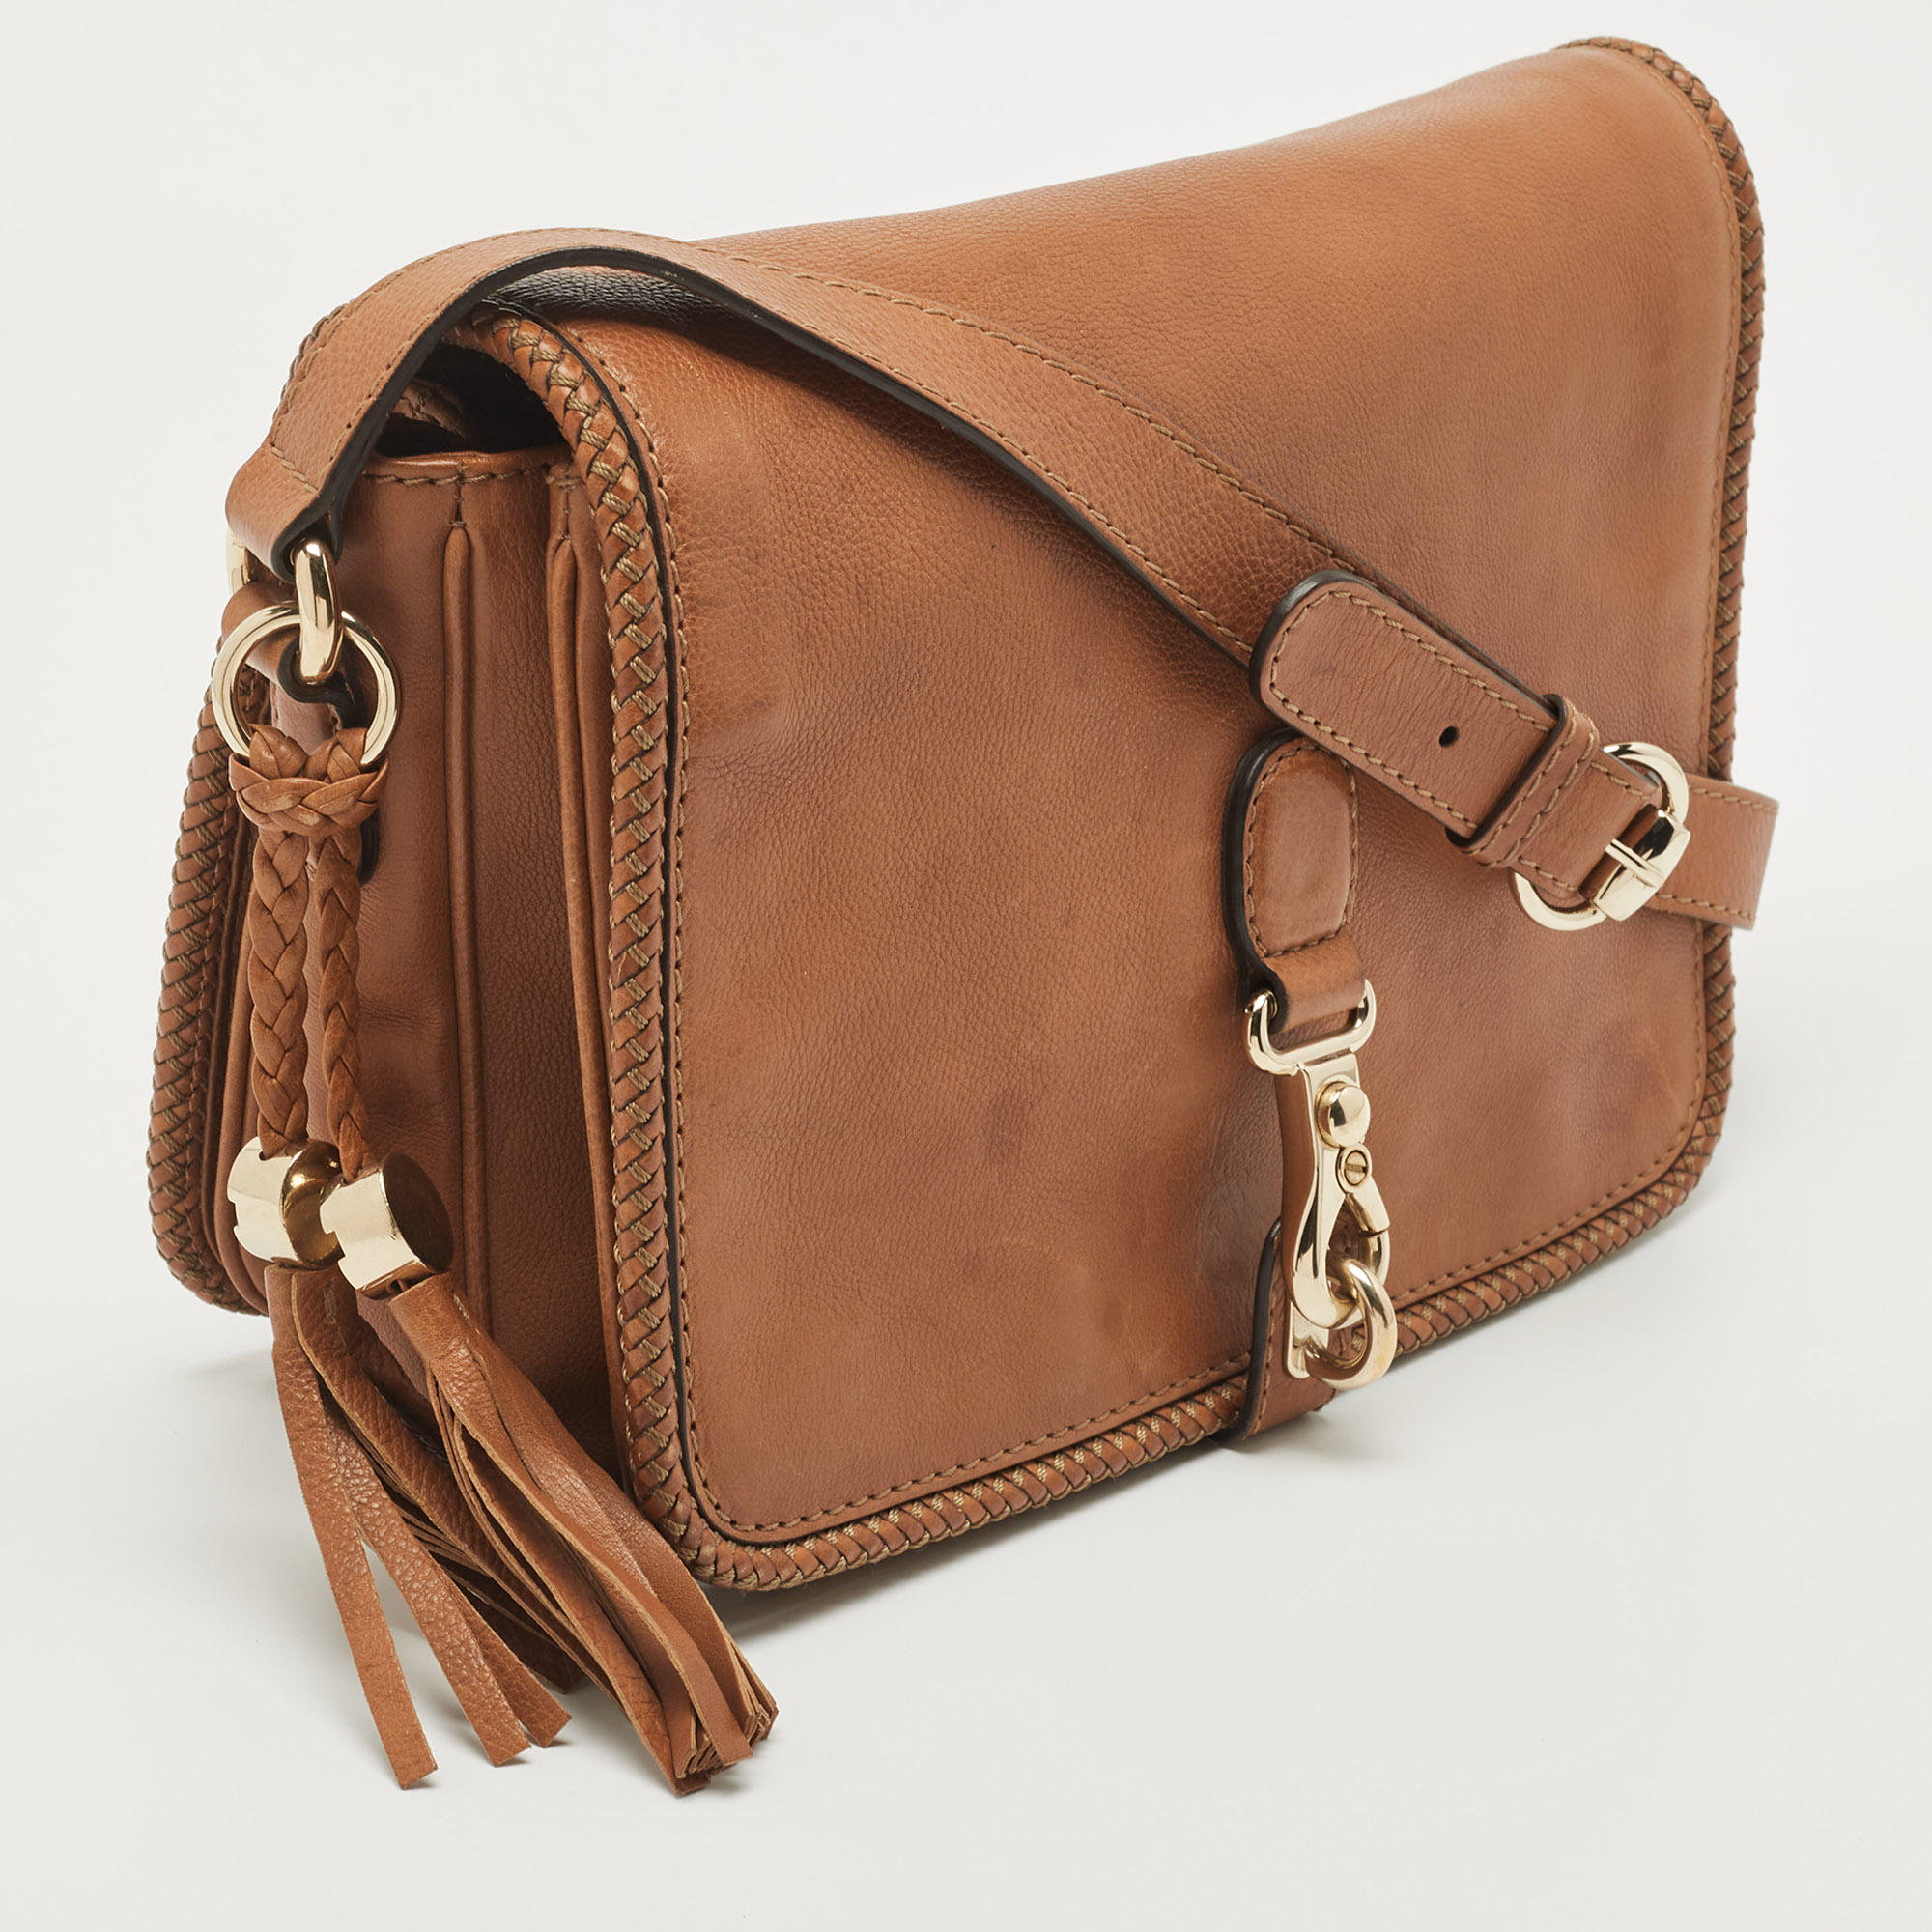 Gucci Brown Leather Medium Marrakech Shoulder Bag